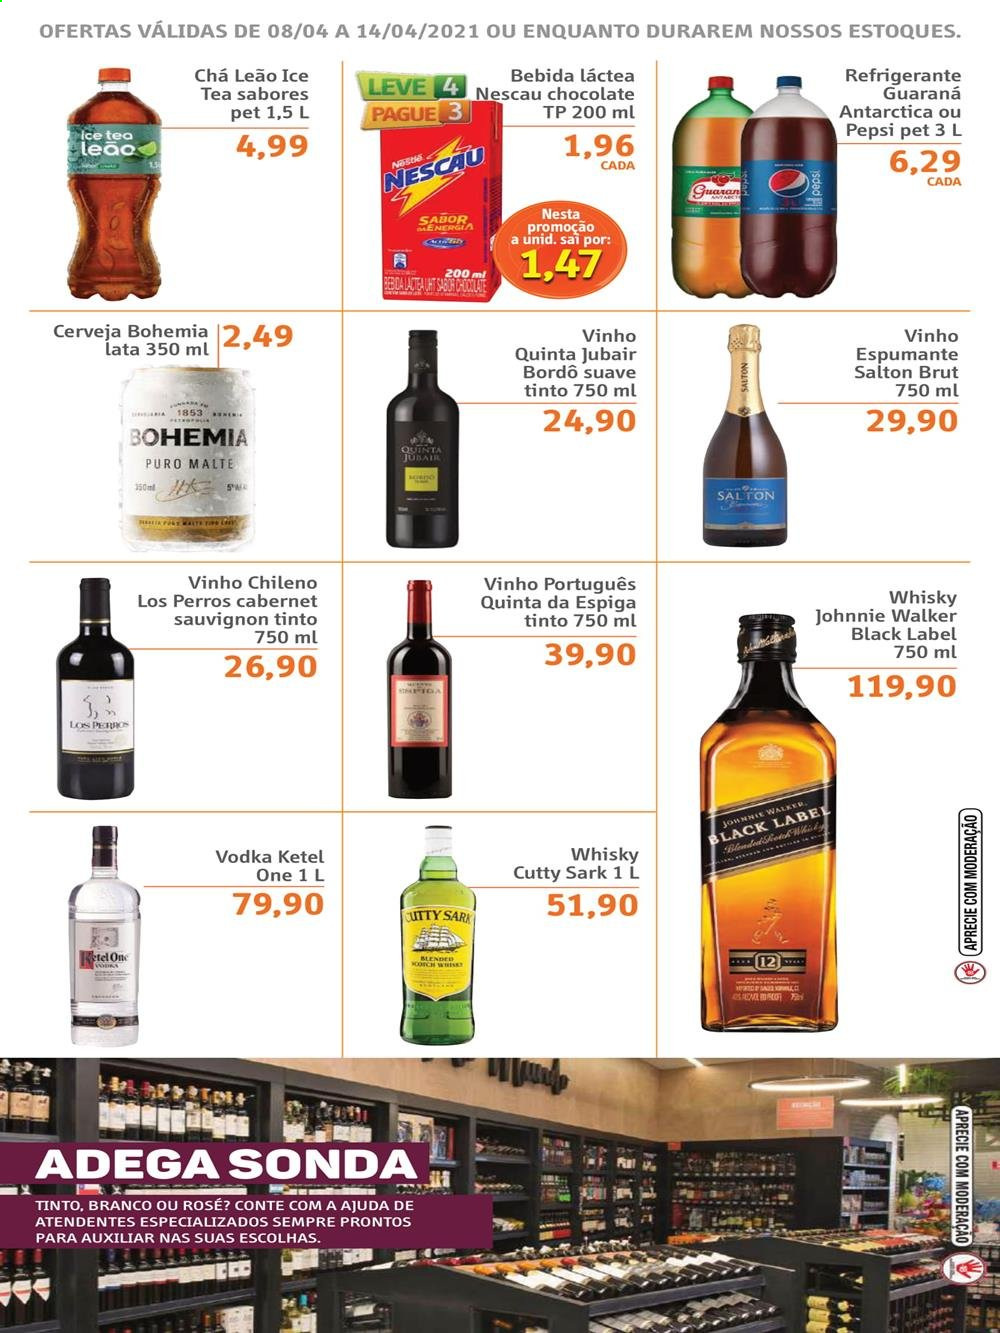 Encarte Sonda Supermercados  - 08.04.2021 - 14.04.2021.